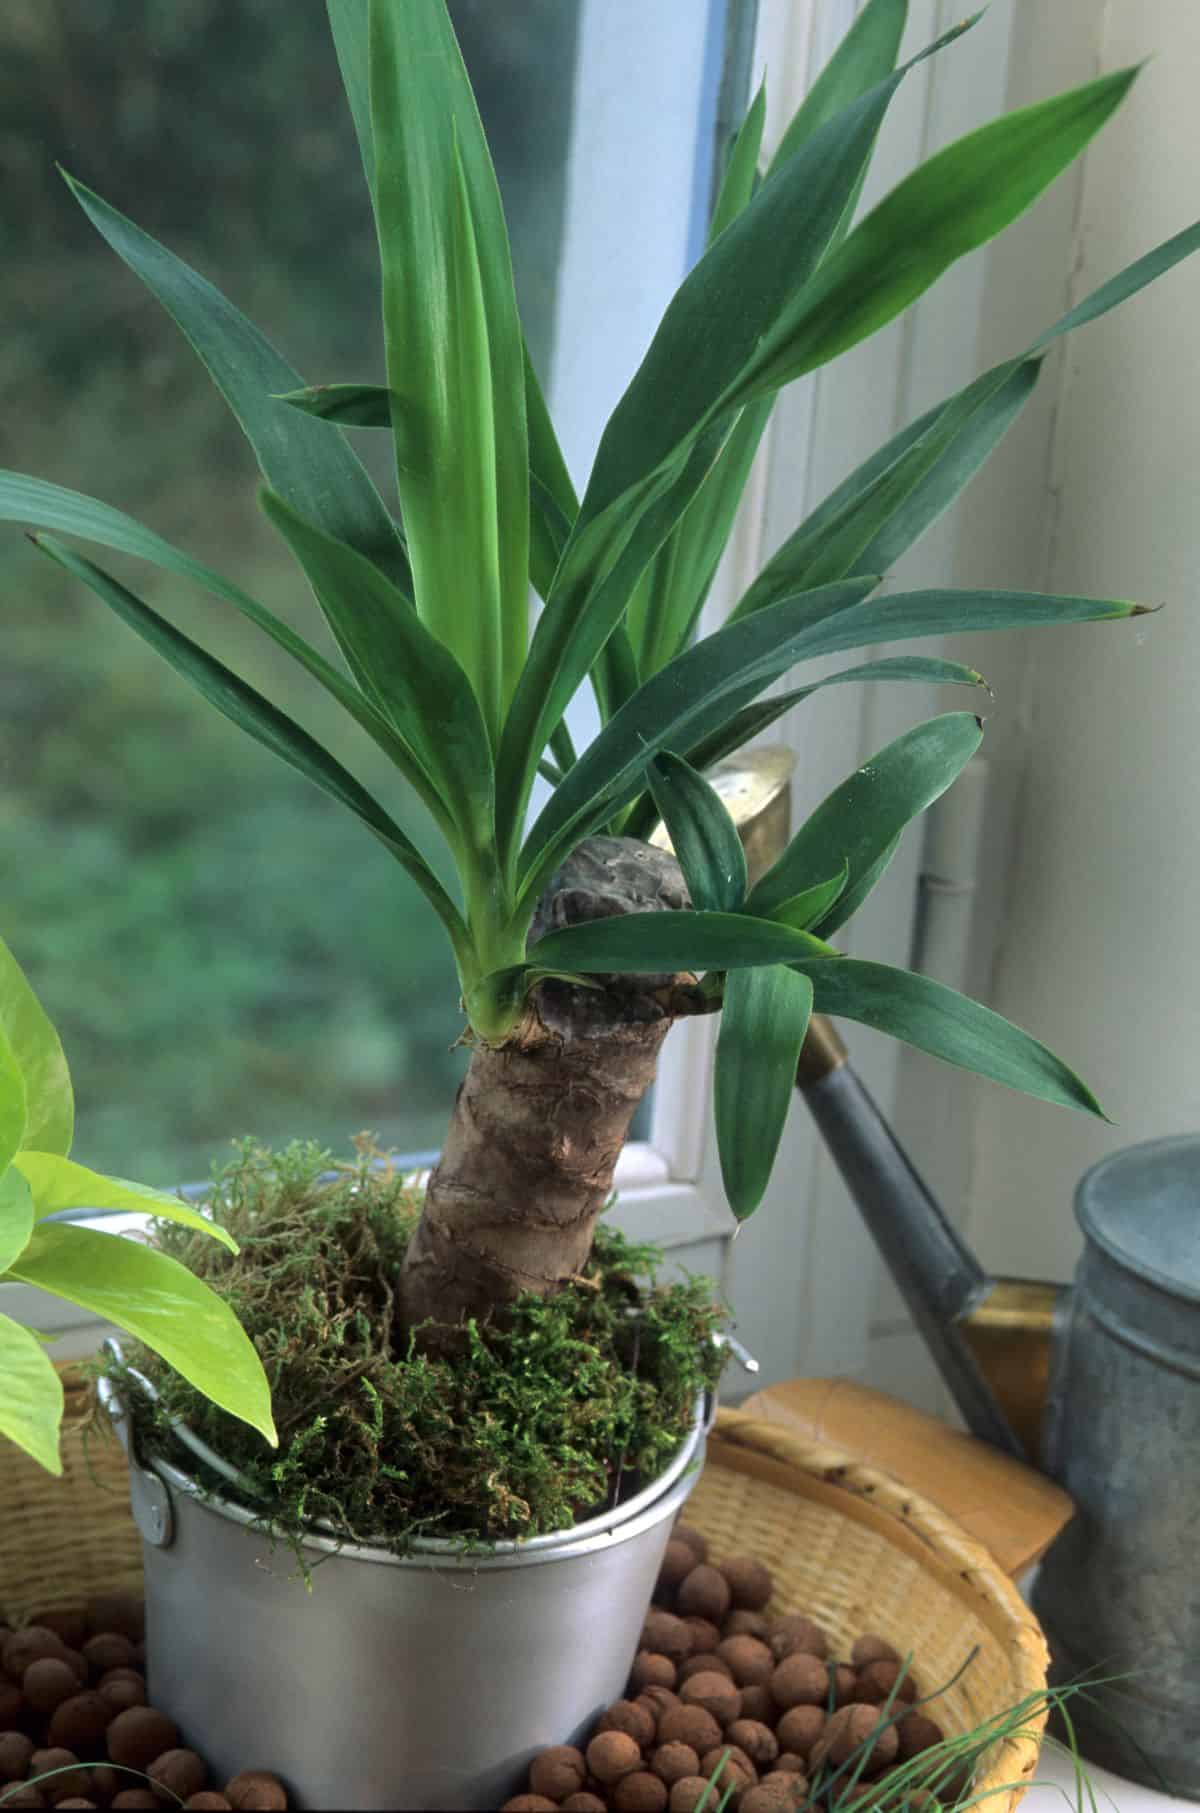 Yucca Spanish Bayonet grows in a small pot on a windowsill.